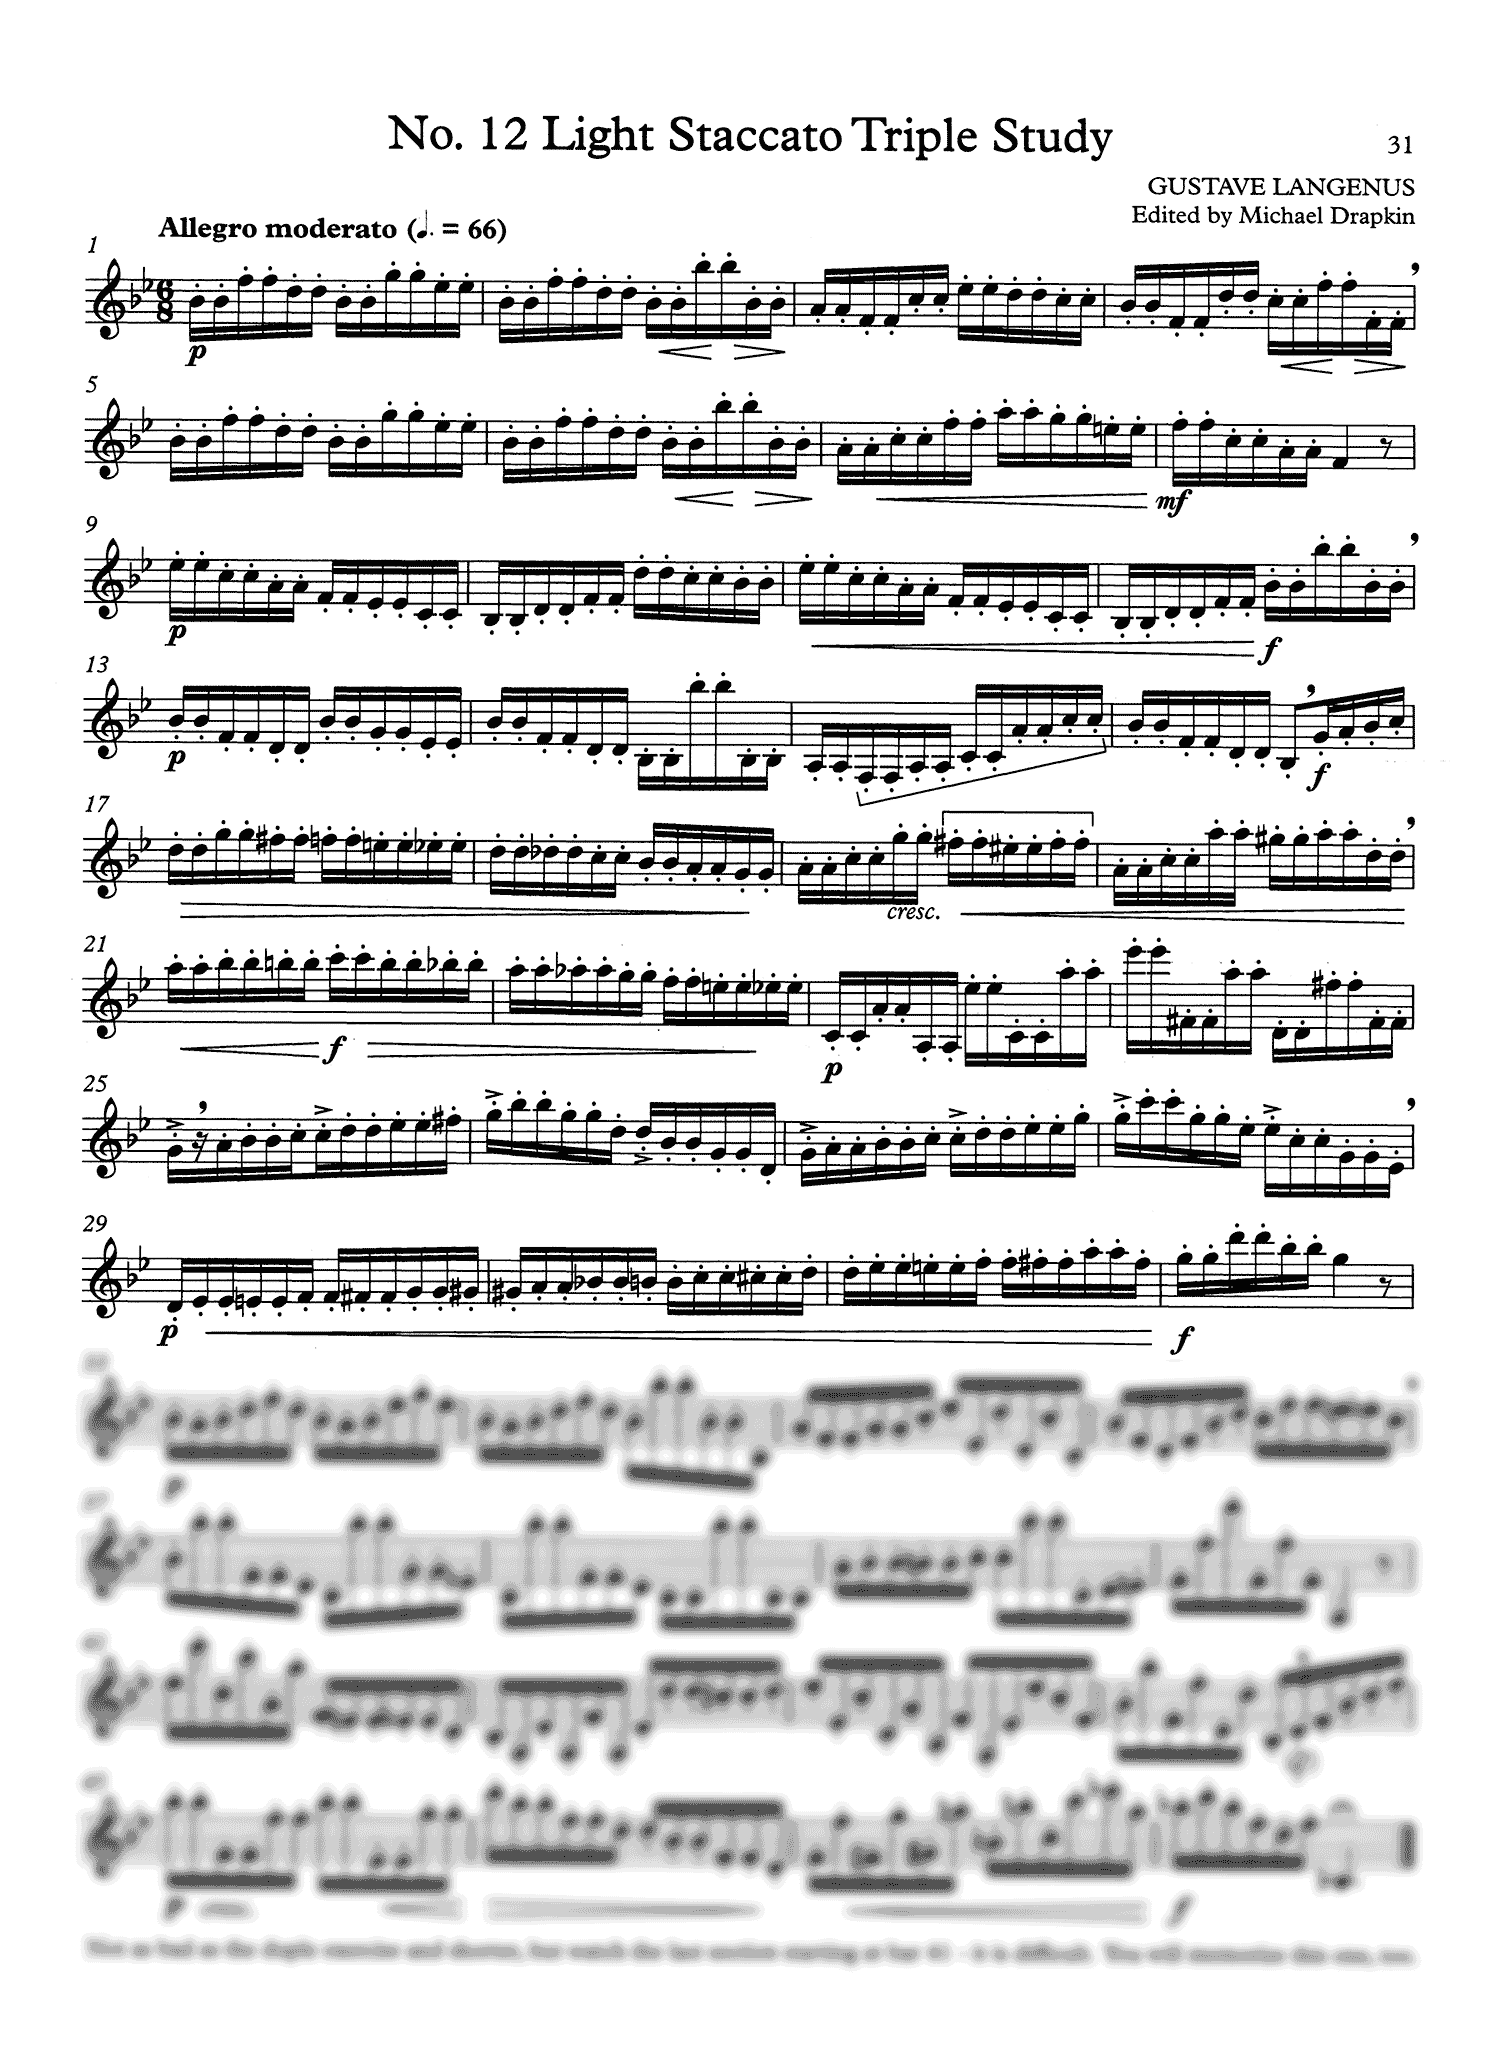 Drapkin’s Book of Clarinet Calisthenics Page 31